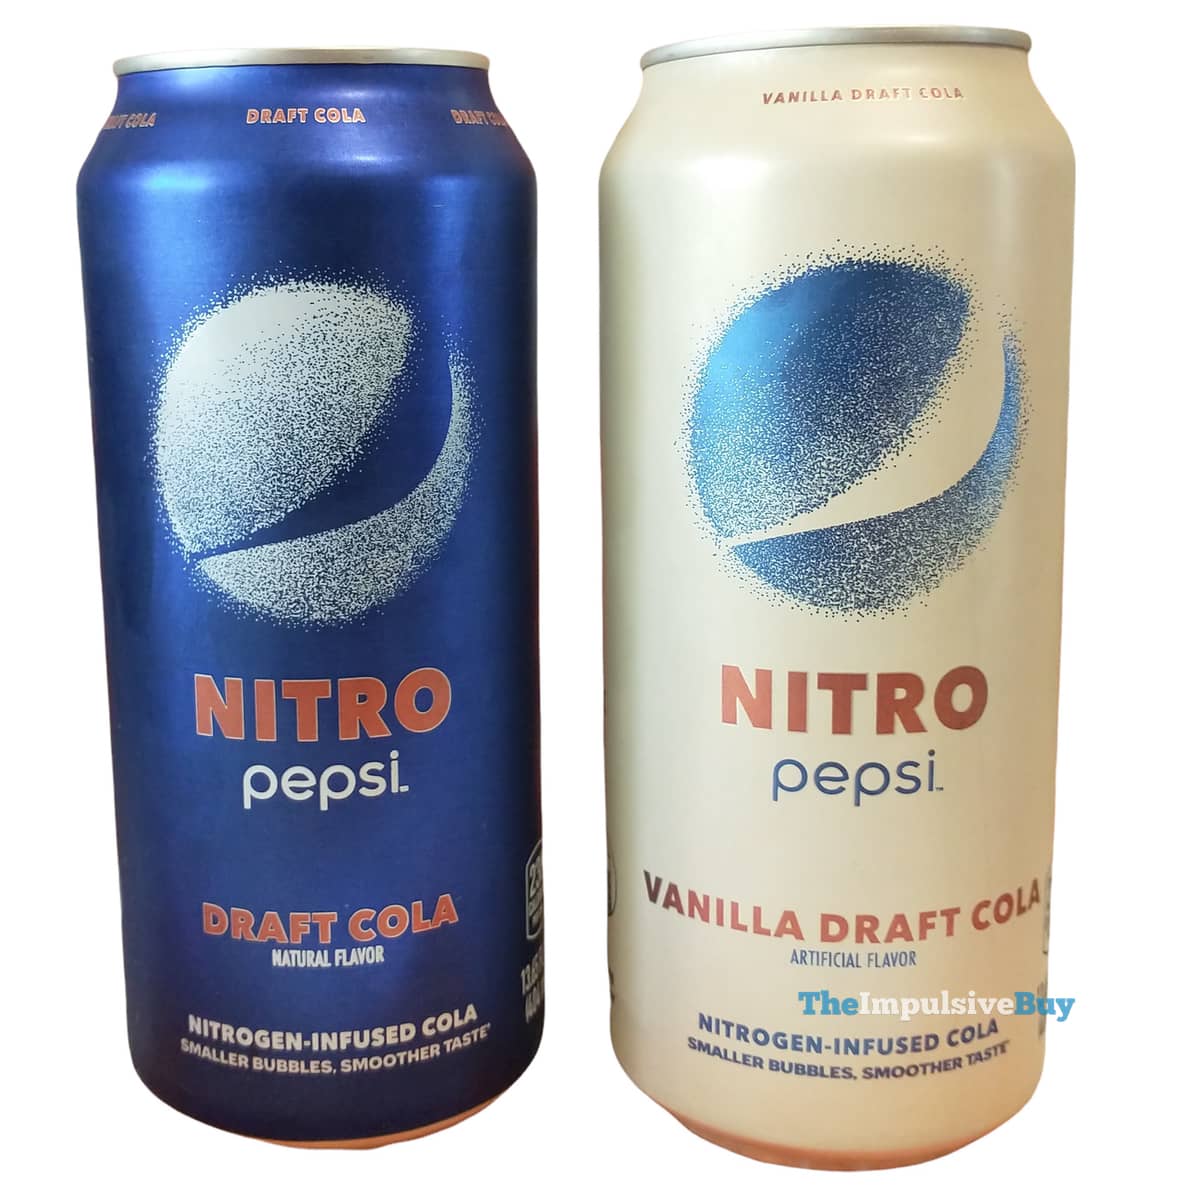 What Does Nitro Pepsi Taste Like? - Vending Business Machine Pro Service